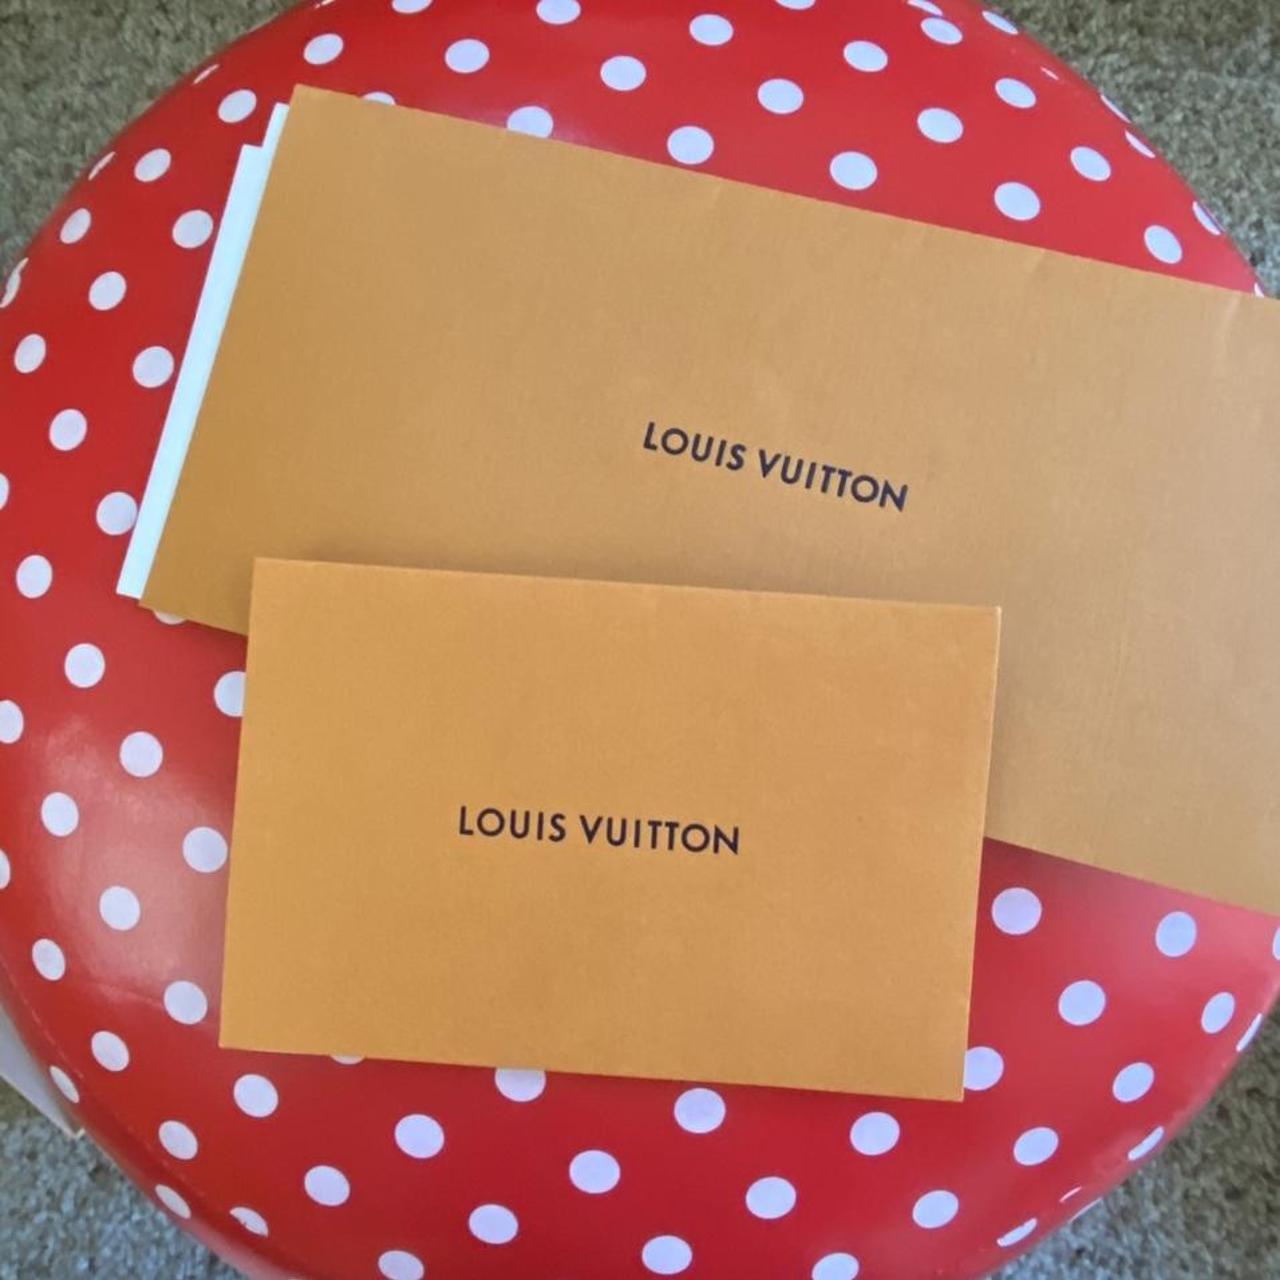 Louis Vuitton Metis nuova indossata 3 volte troppo - Depop